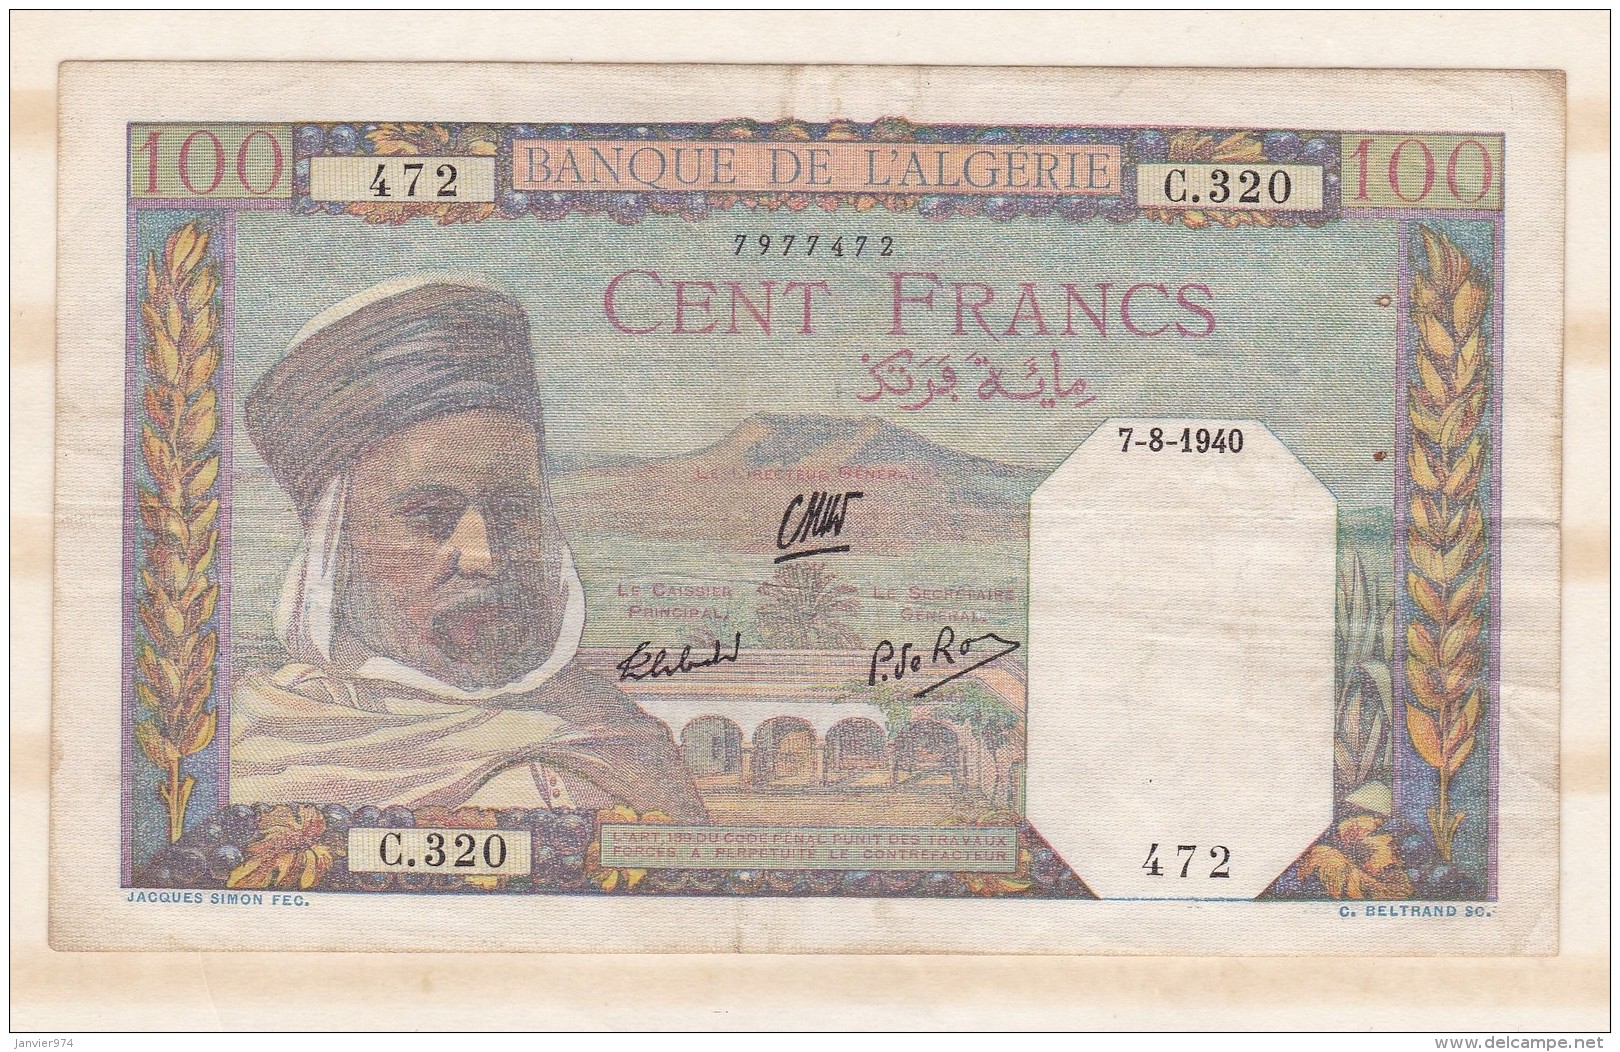 Billet . 100 FRANCS 27 - 8  - 1940, Alphabet C.320  N° 472 - Algérie